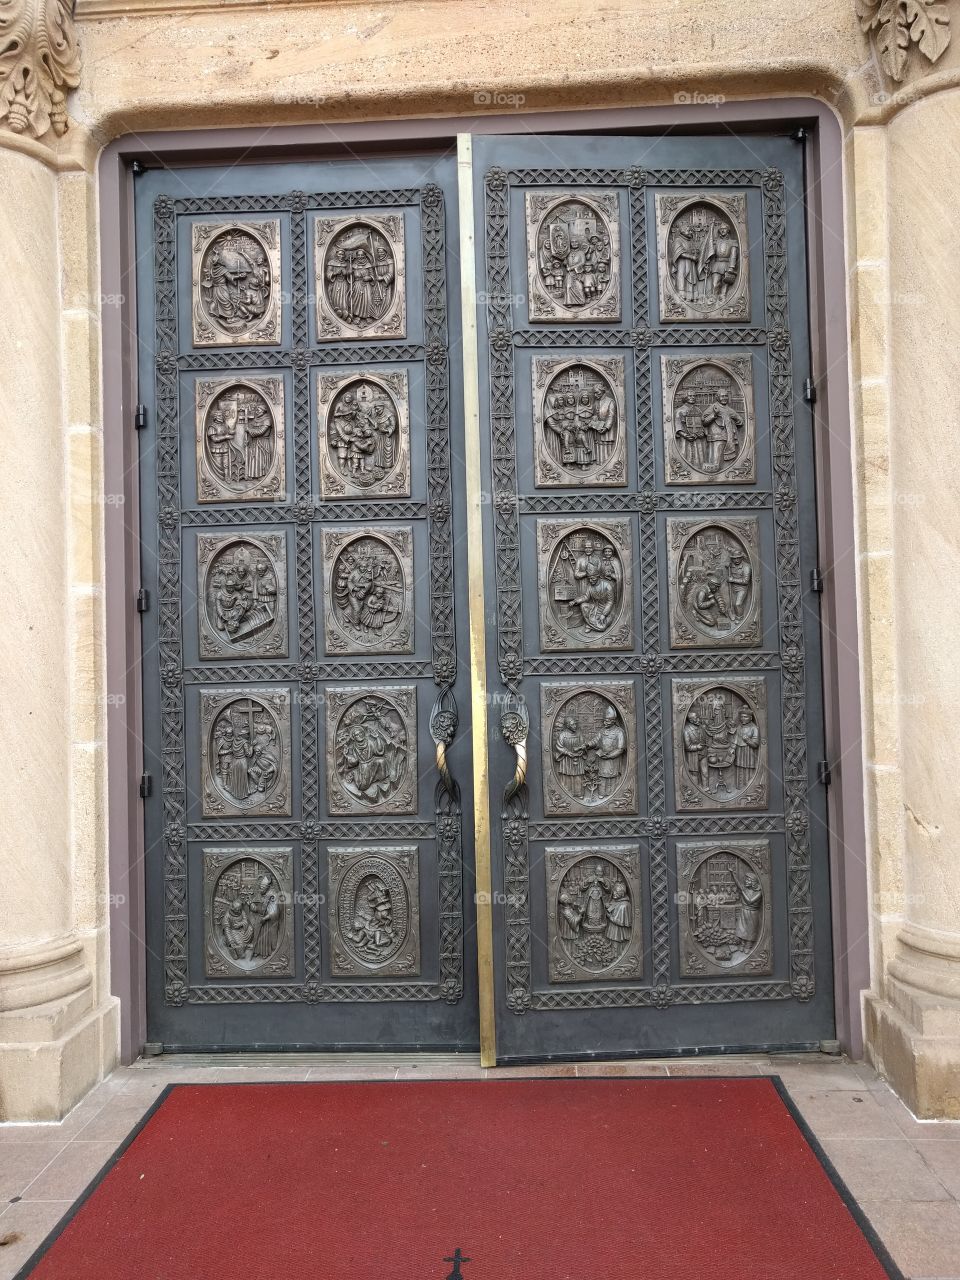 Cathedral doors, Santa Fe, NM